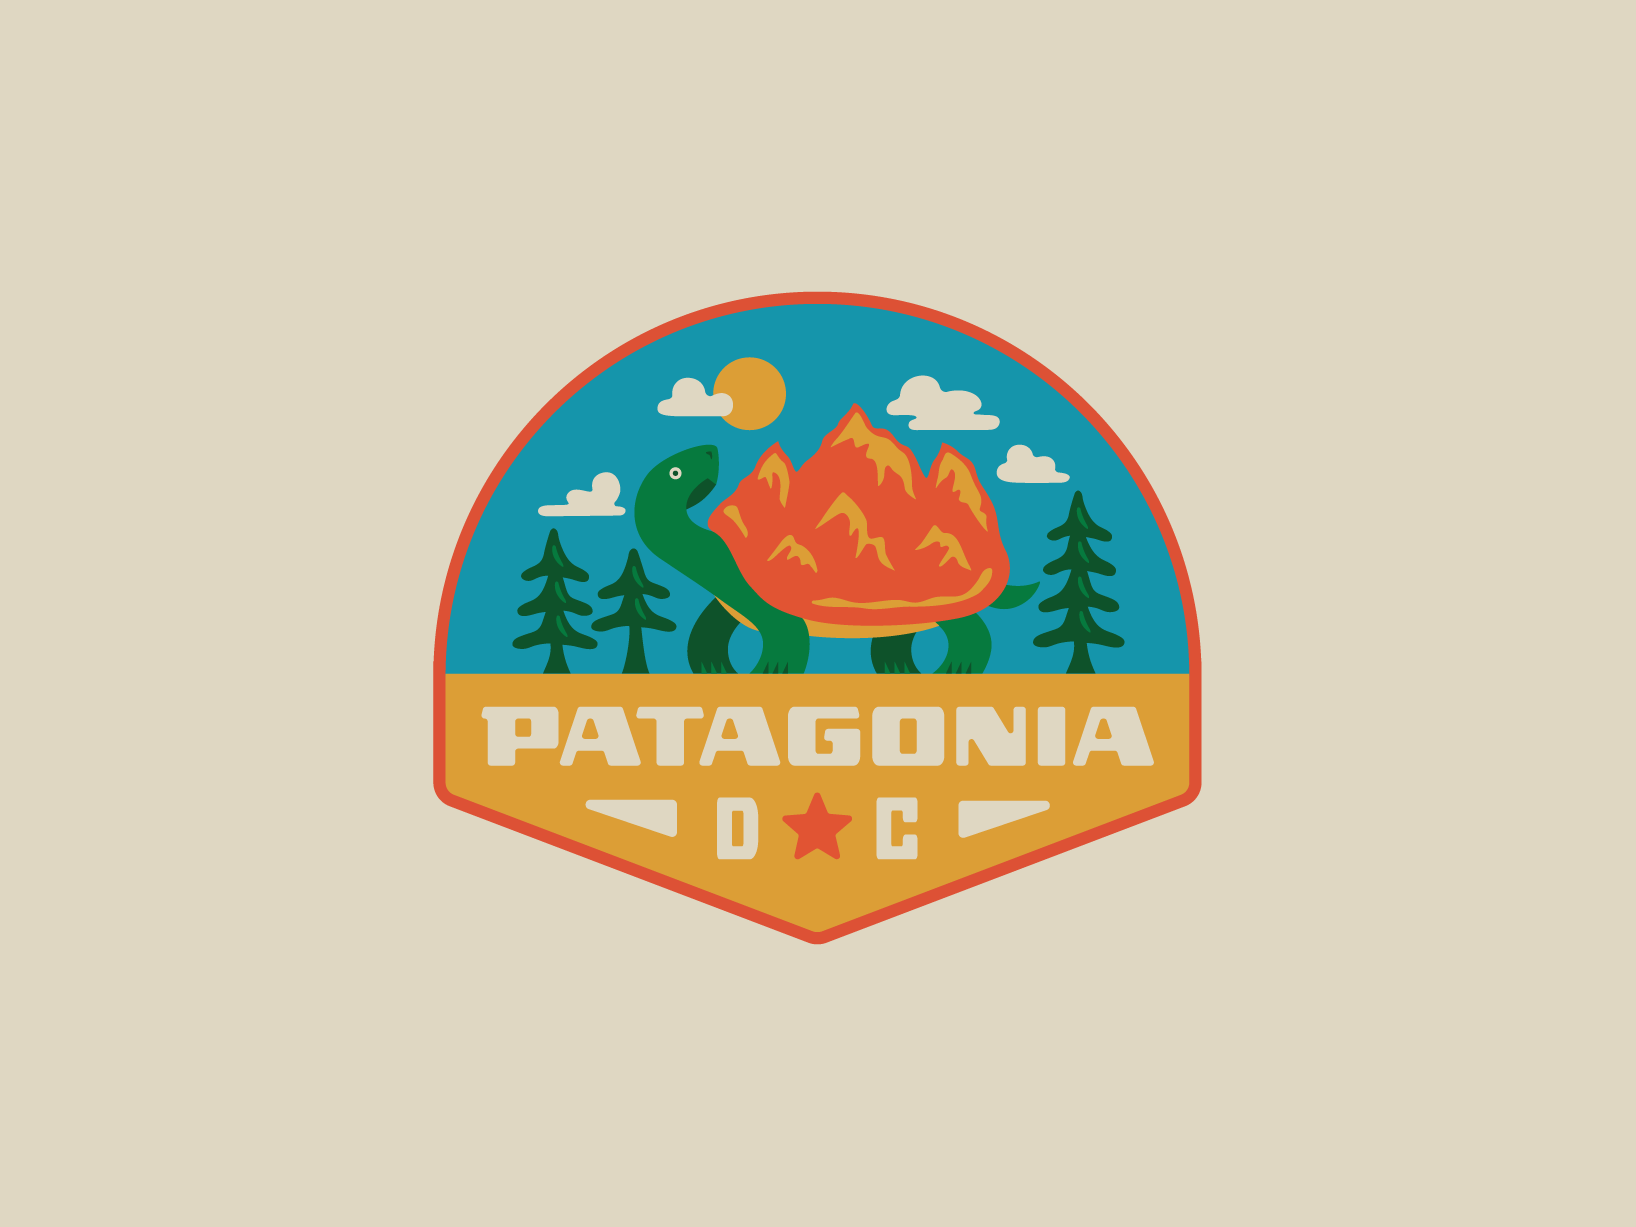 Enjoy the incredible views of Patagonia